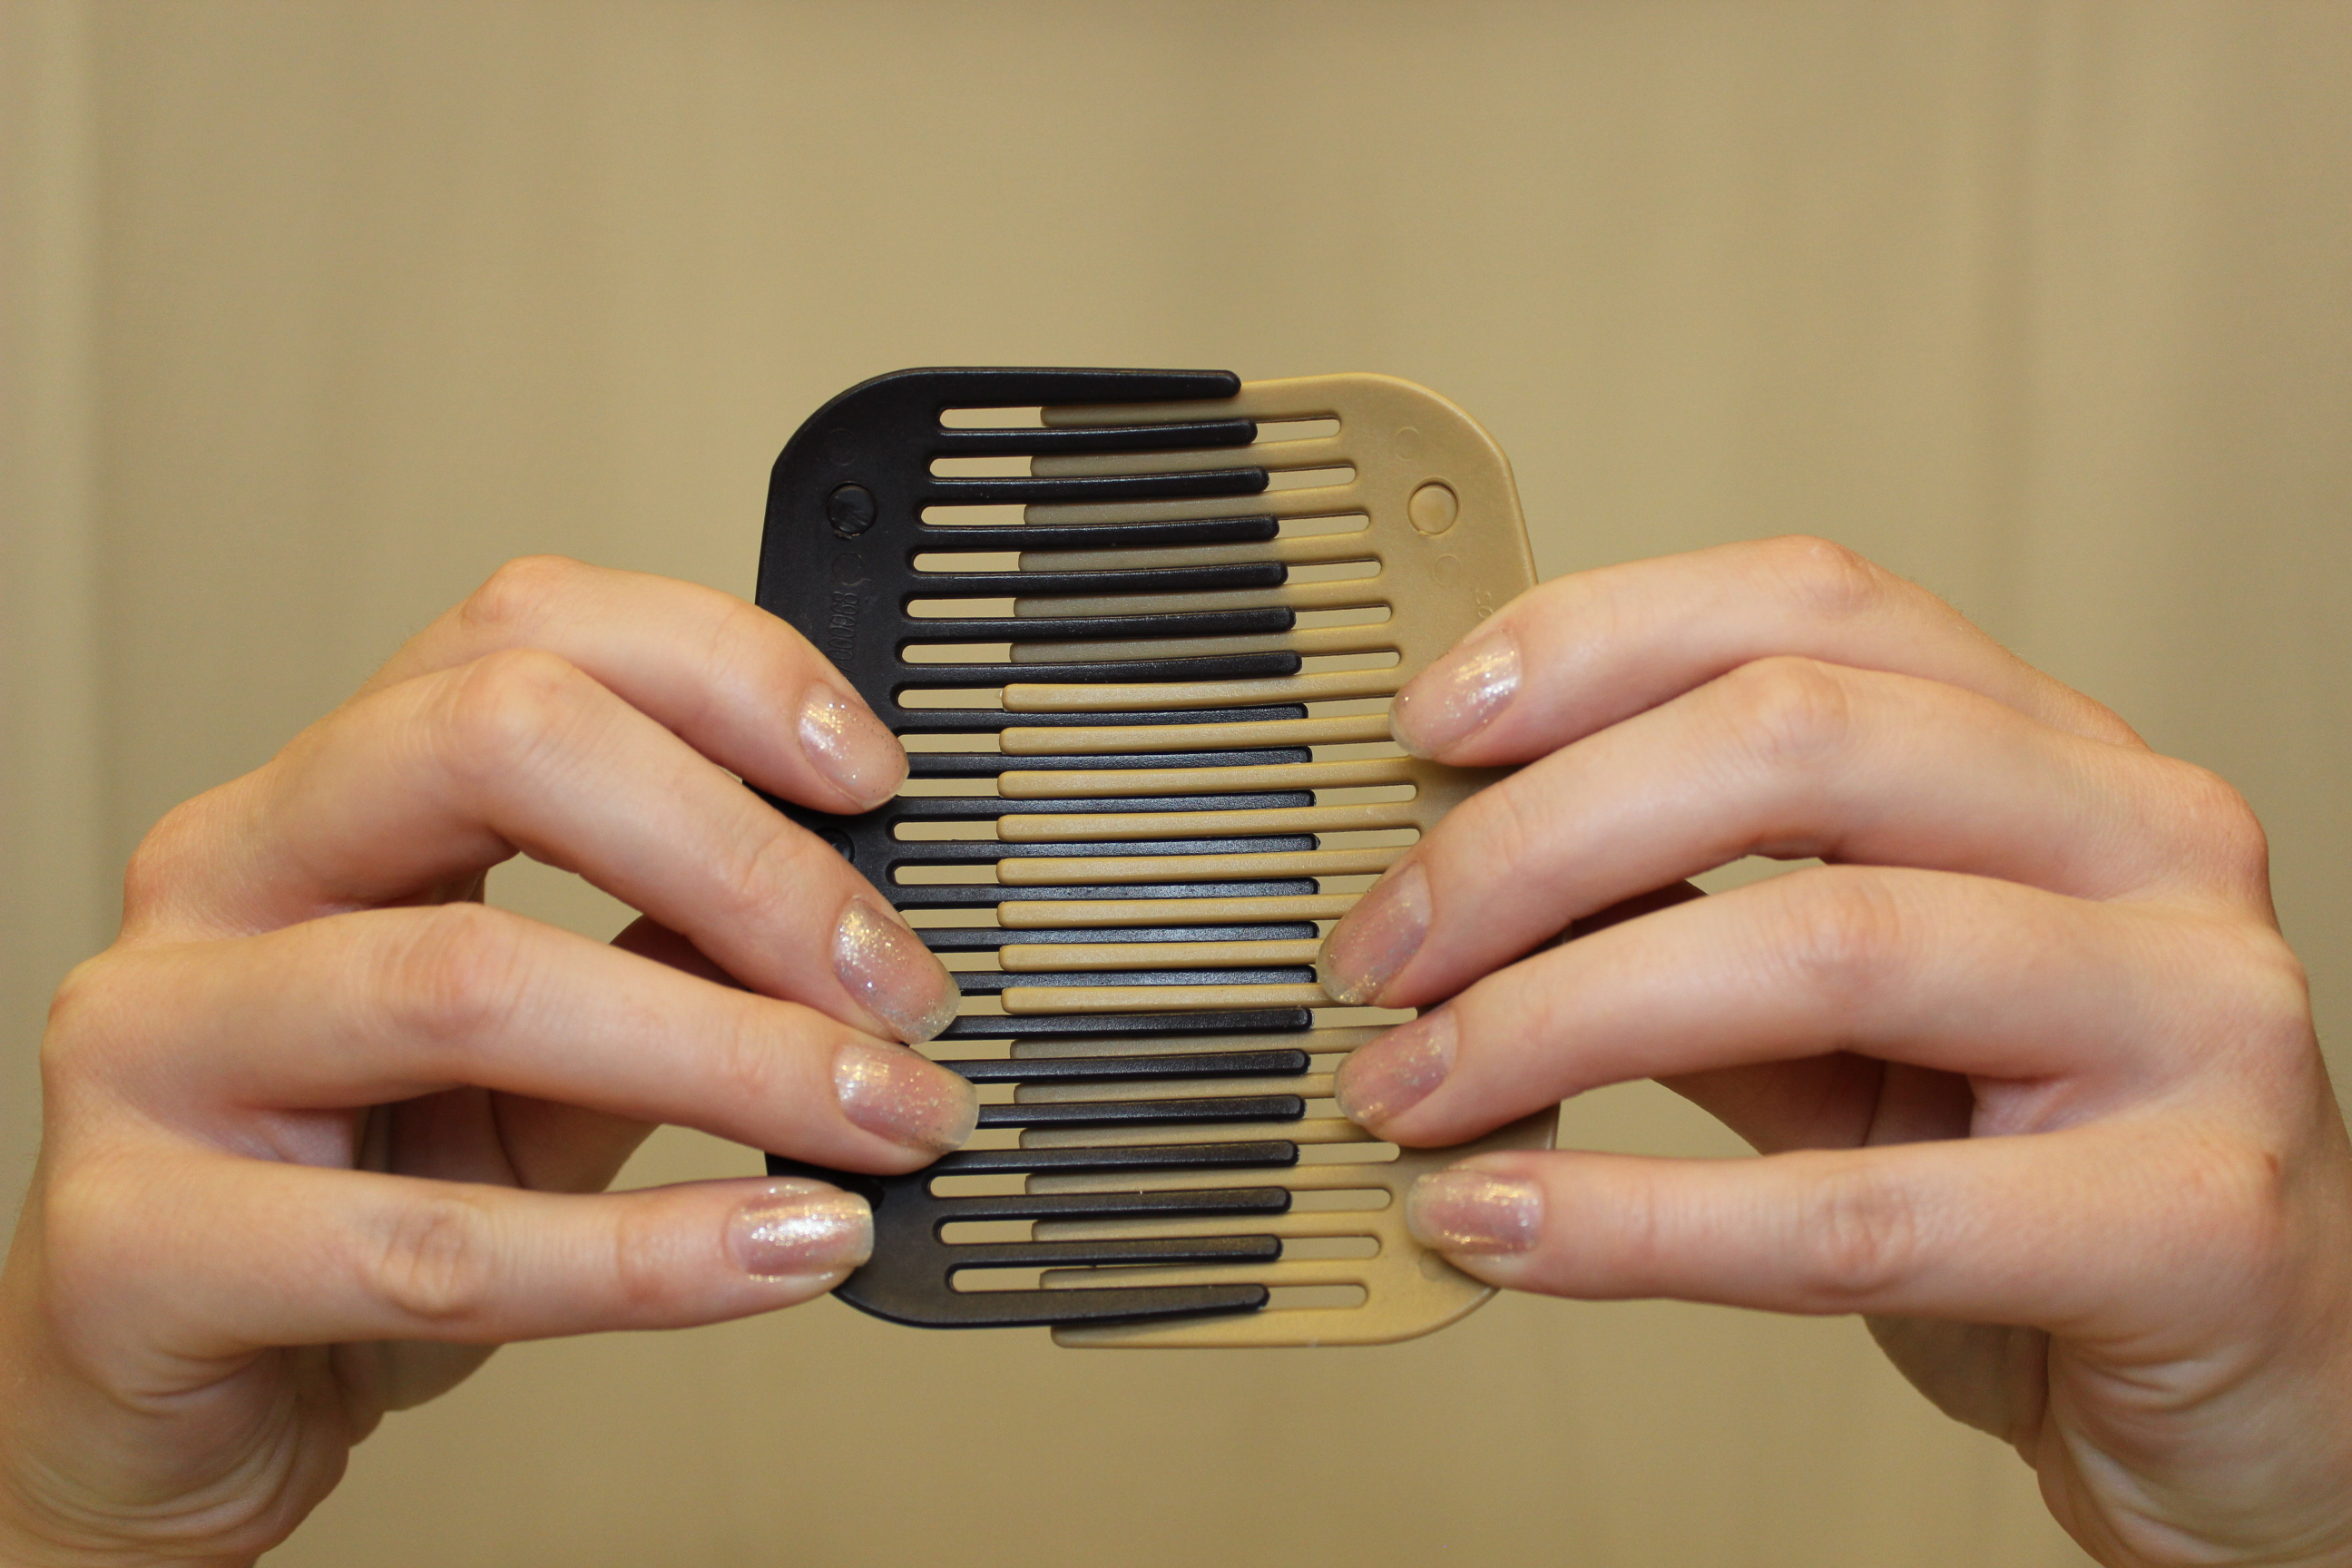 Interlocked combs